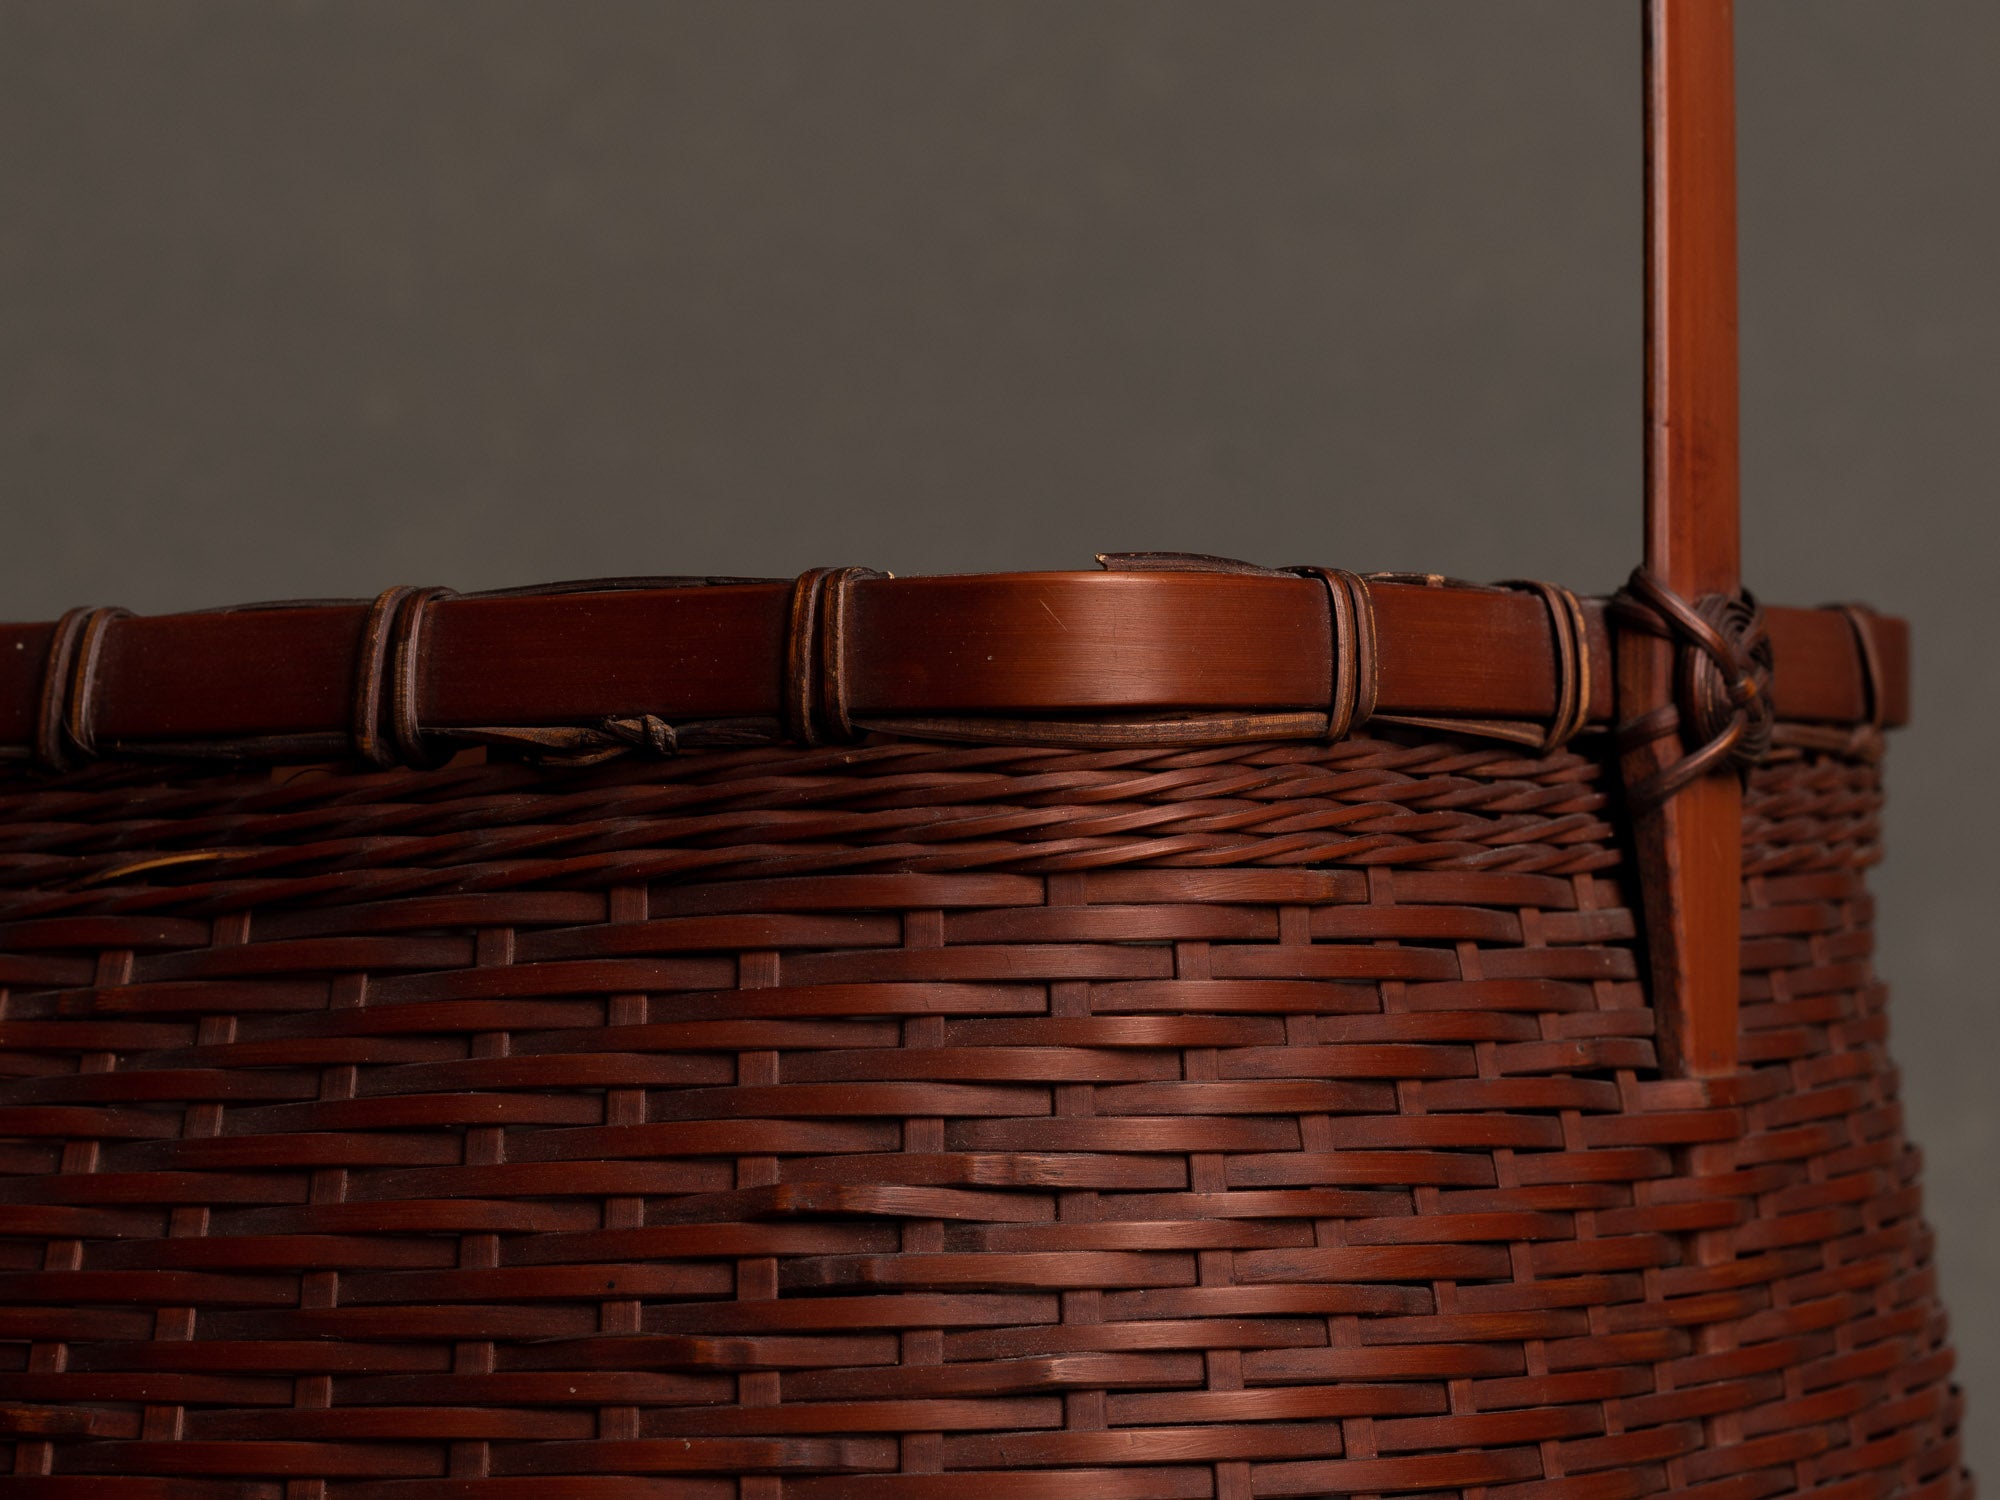 Rare Hanakago, panier rectangulaire à anse pour l'ikebana, Japon (Ère Shōwa)..Rare rectangular hanakago Ikebana bamboo basket with handle, Japan (Shōwa era)